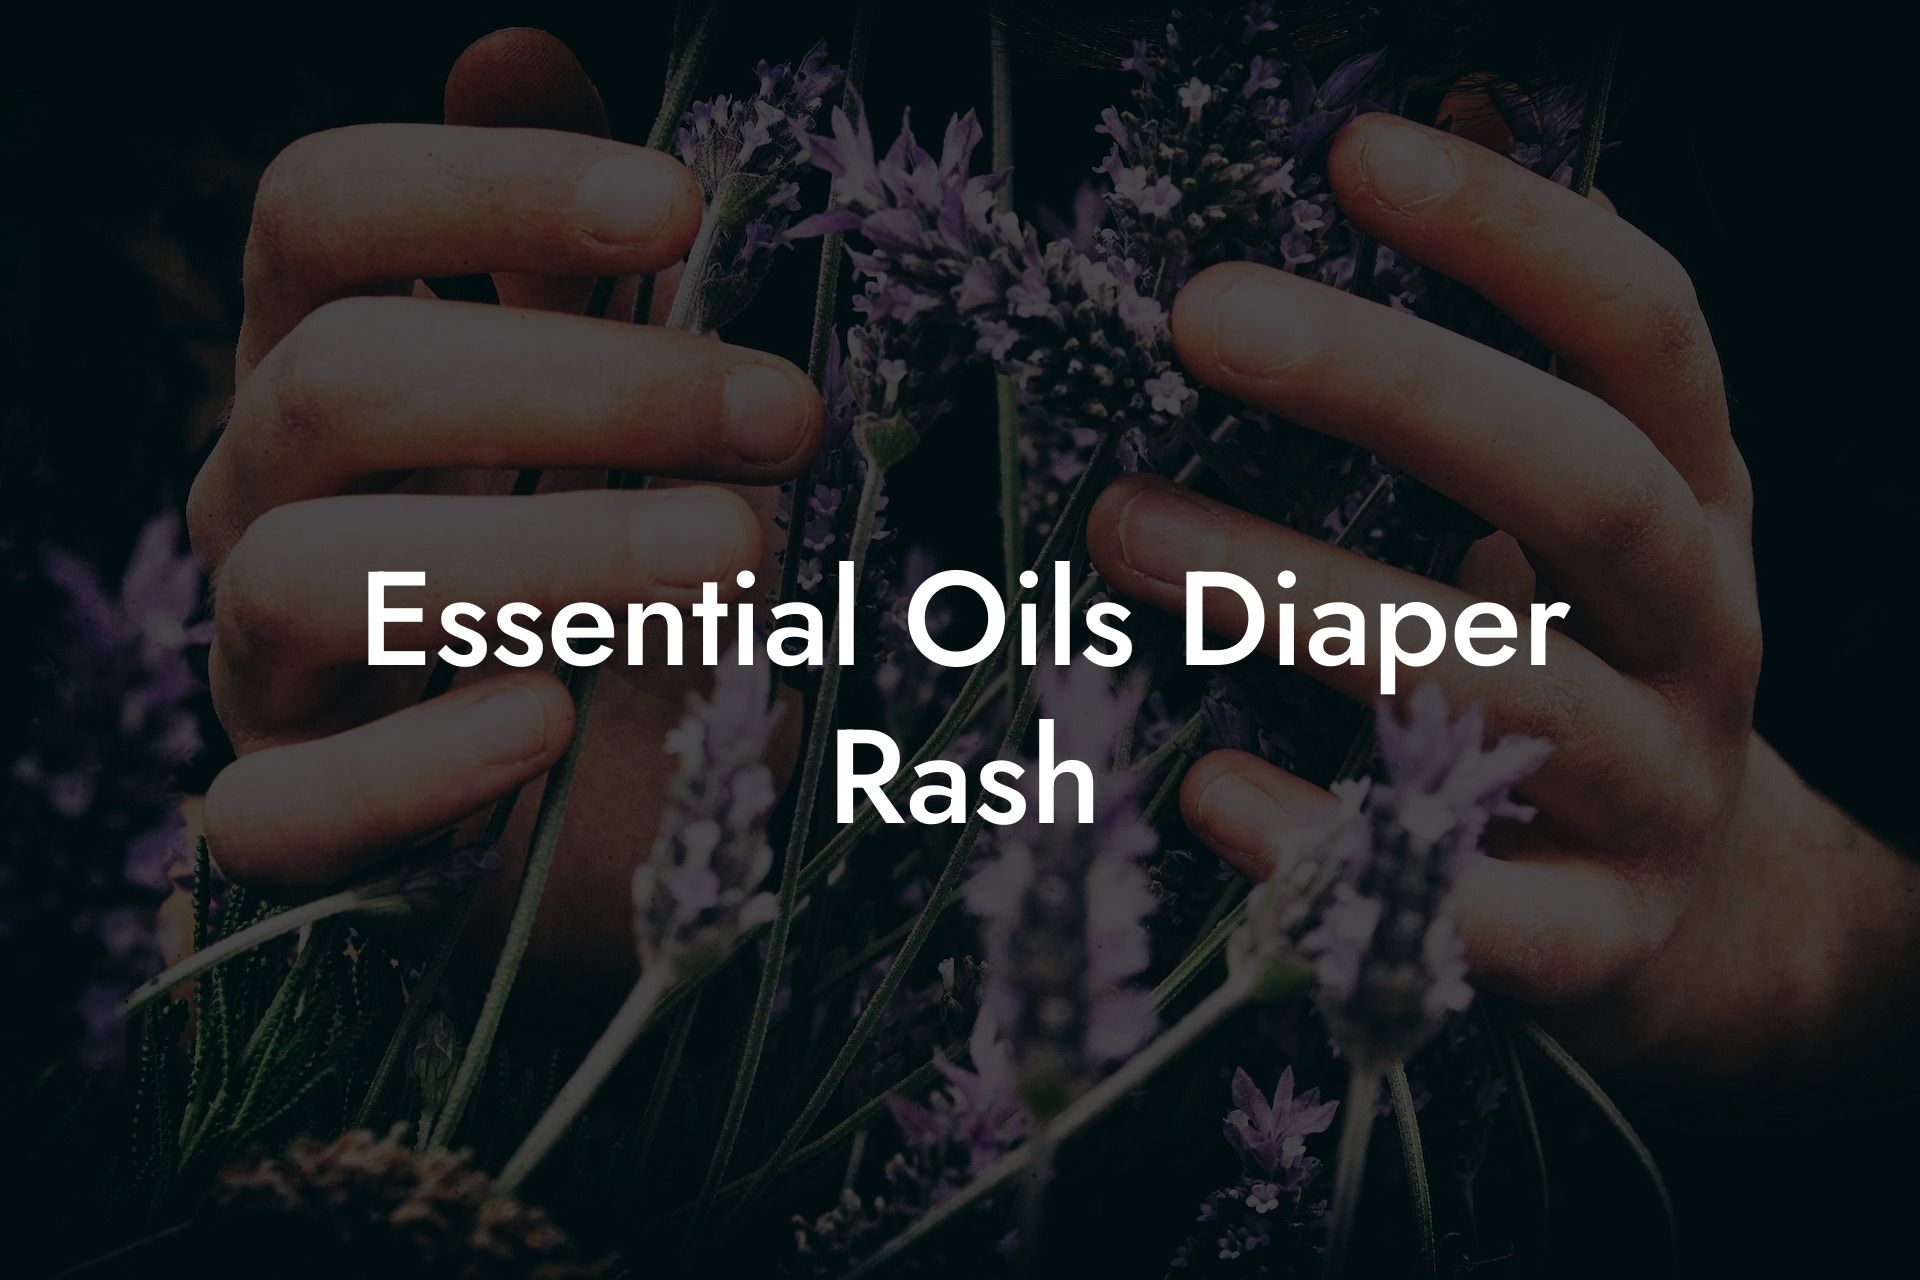 Essential Oils Diaper Rash